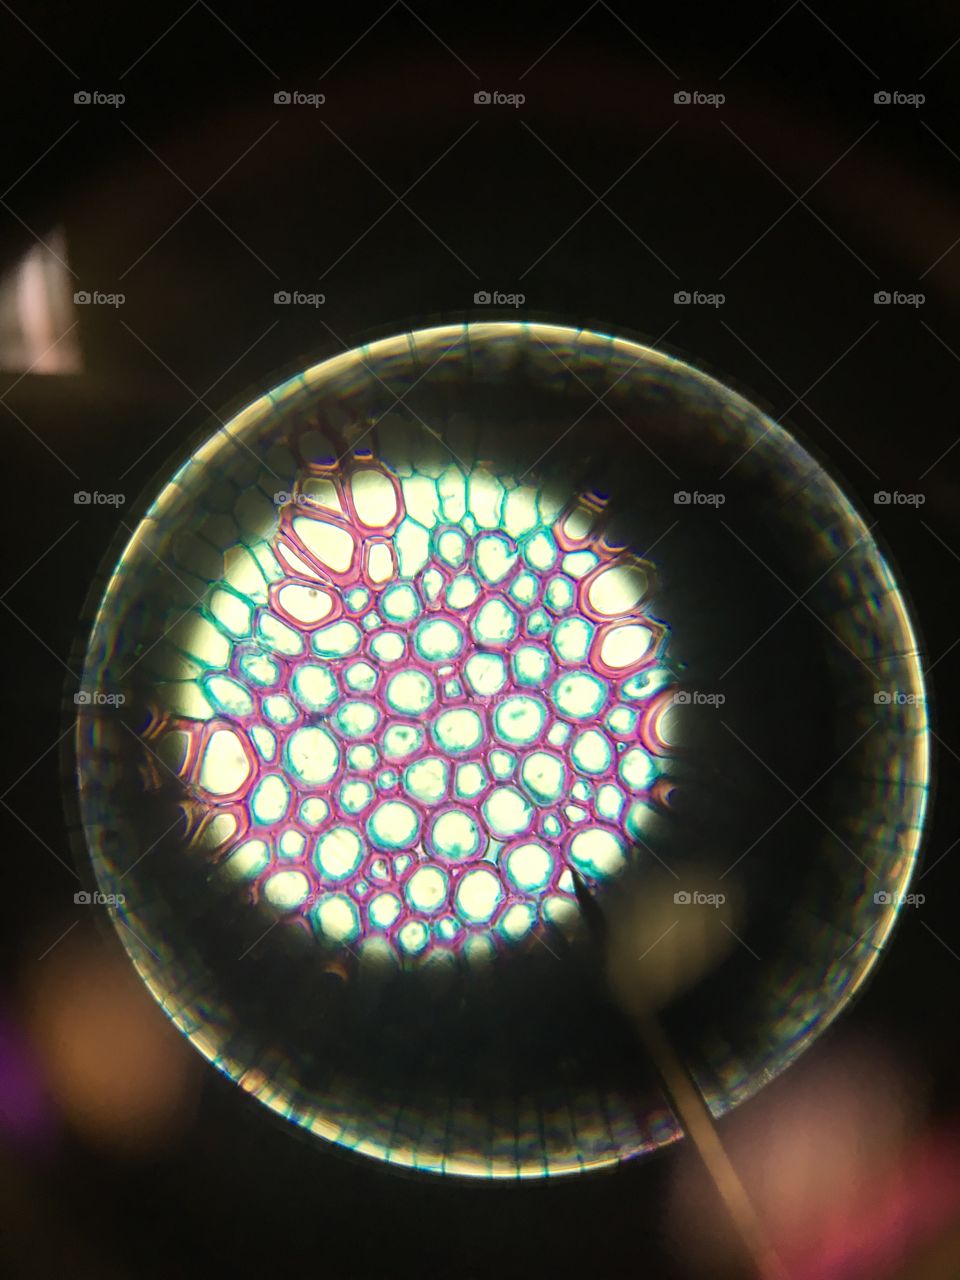 Fungi through the Microscope 